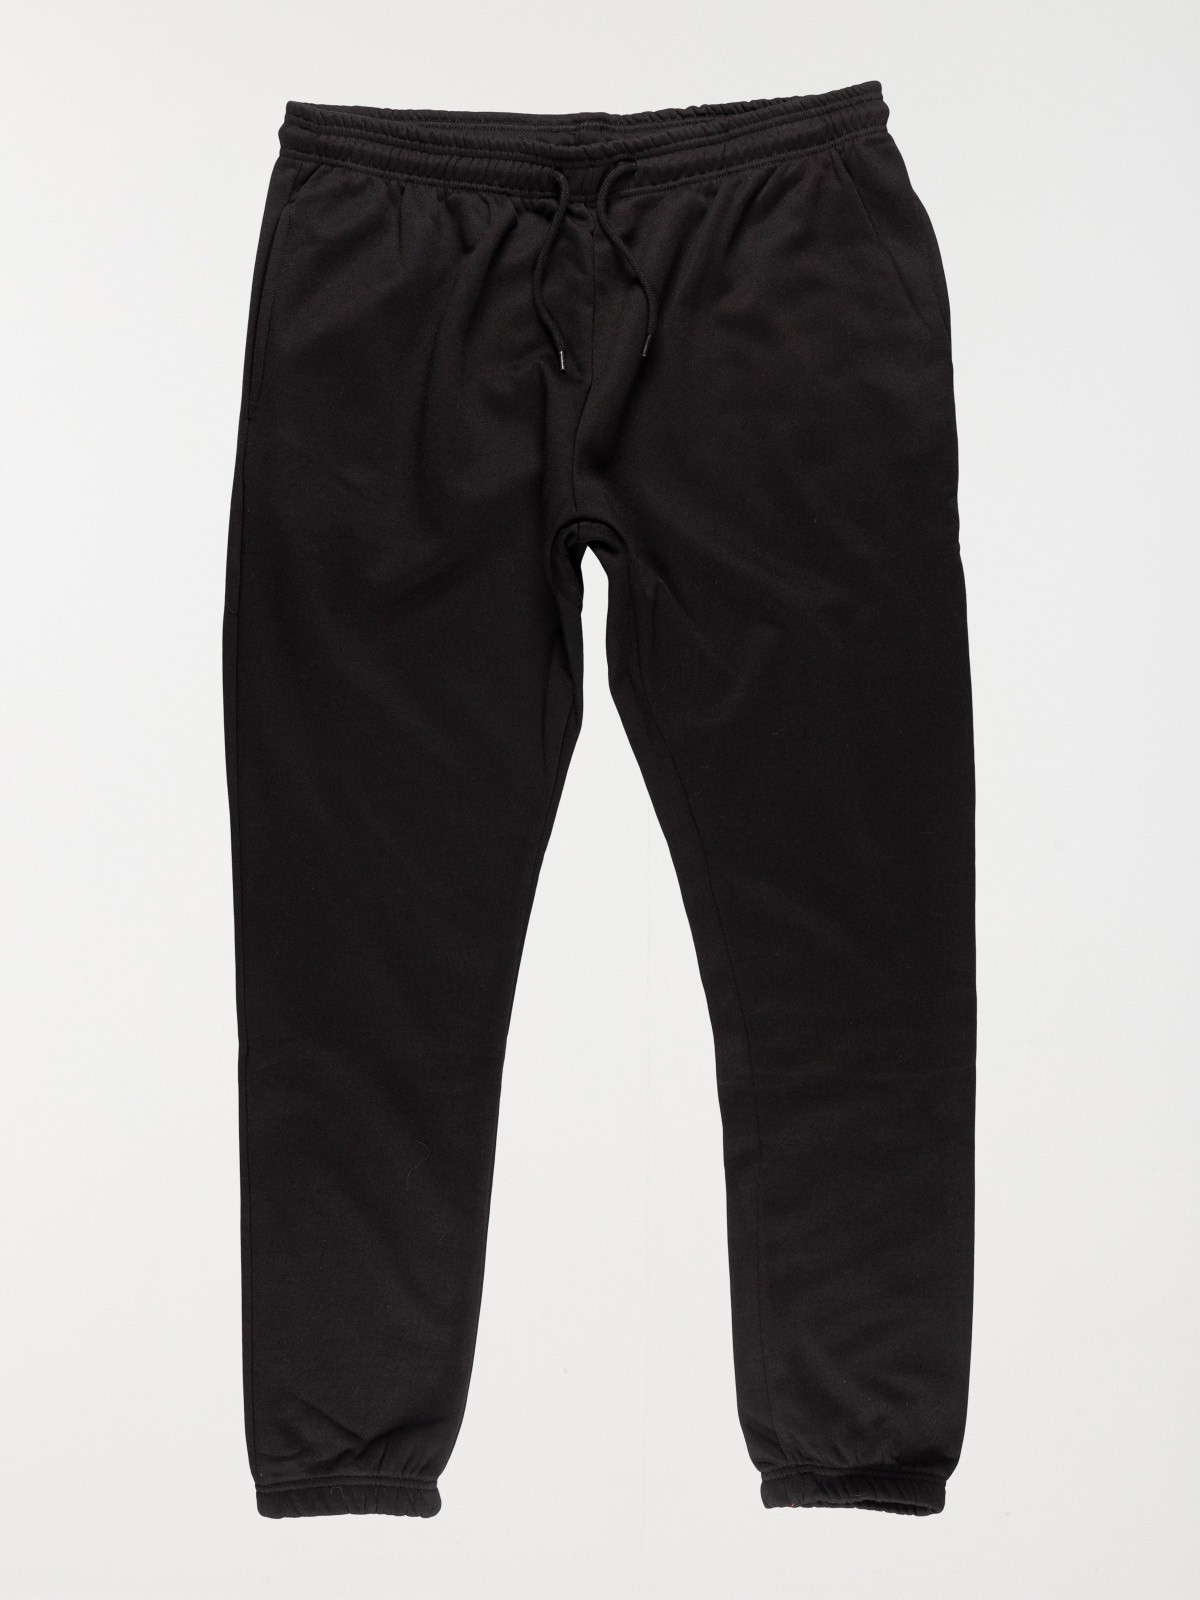 Pantalon sport grande taille noir homme - DistriCenter